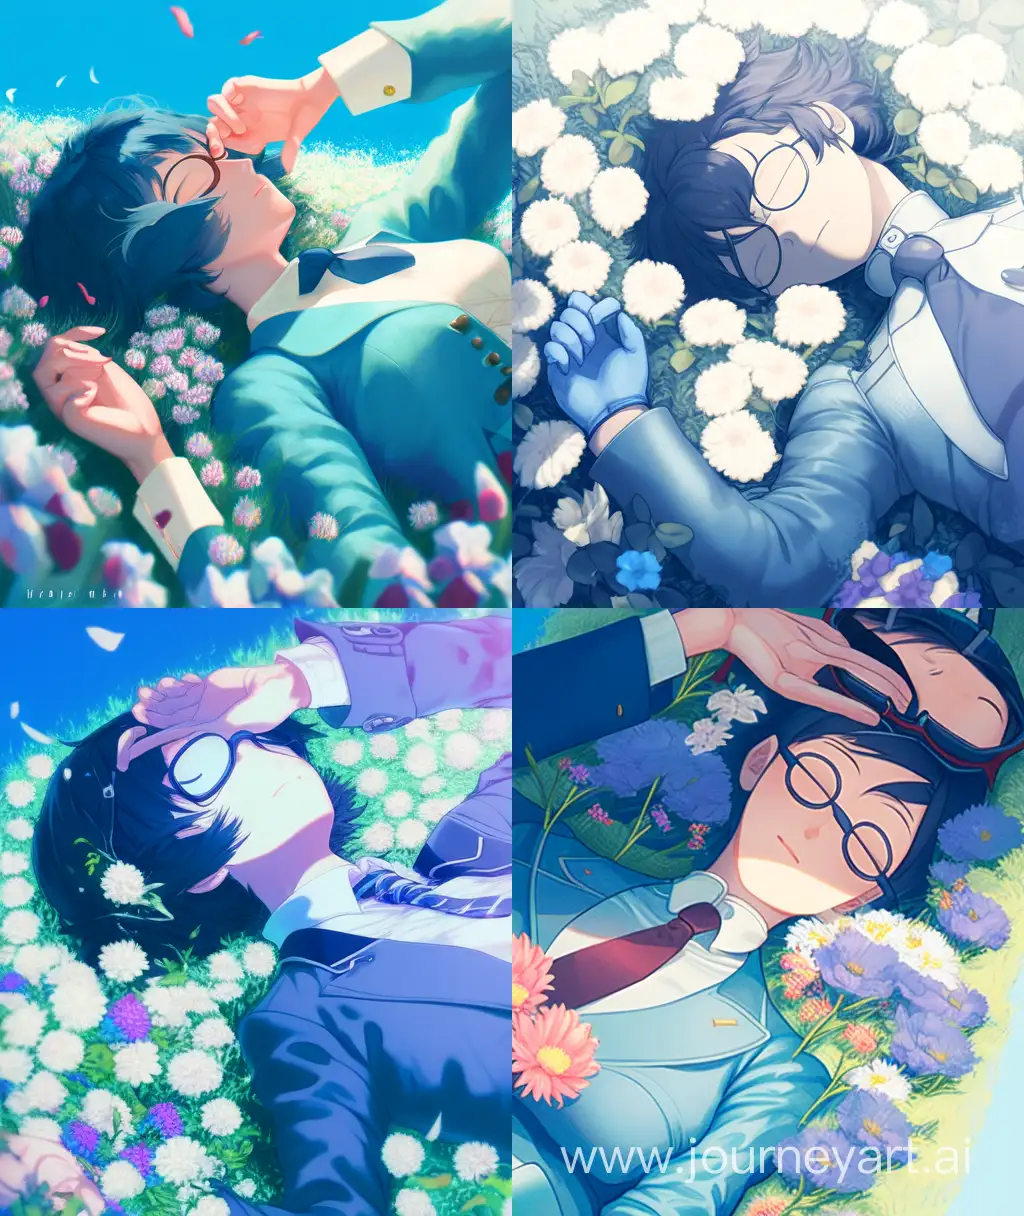 Serene-Woman-Sleeping-on-Blue-Field-Holding-Flowers-High-Definition-Illustration